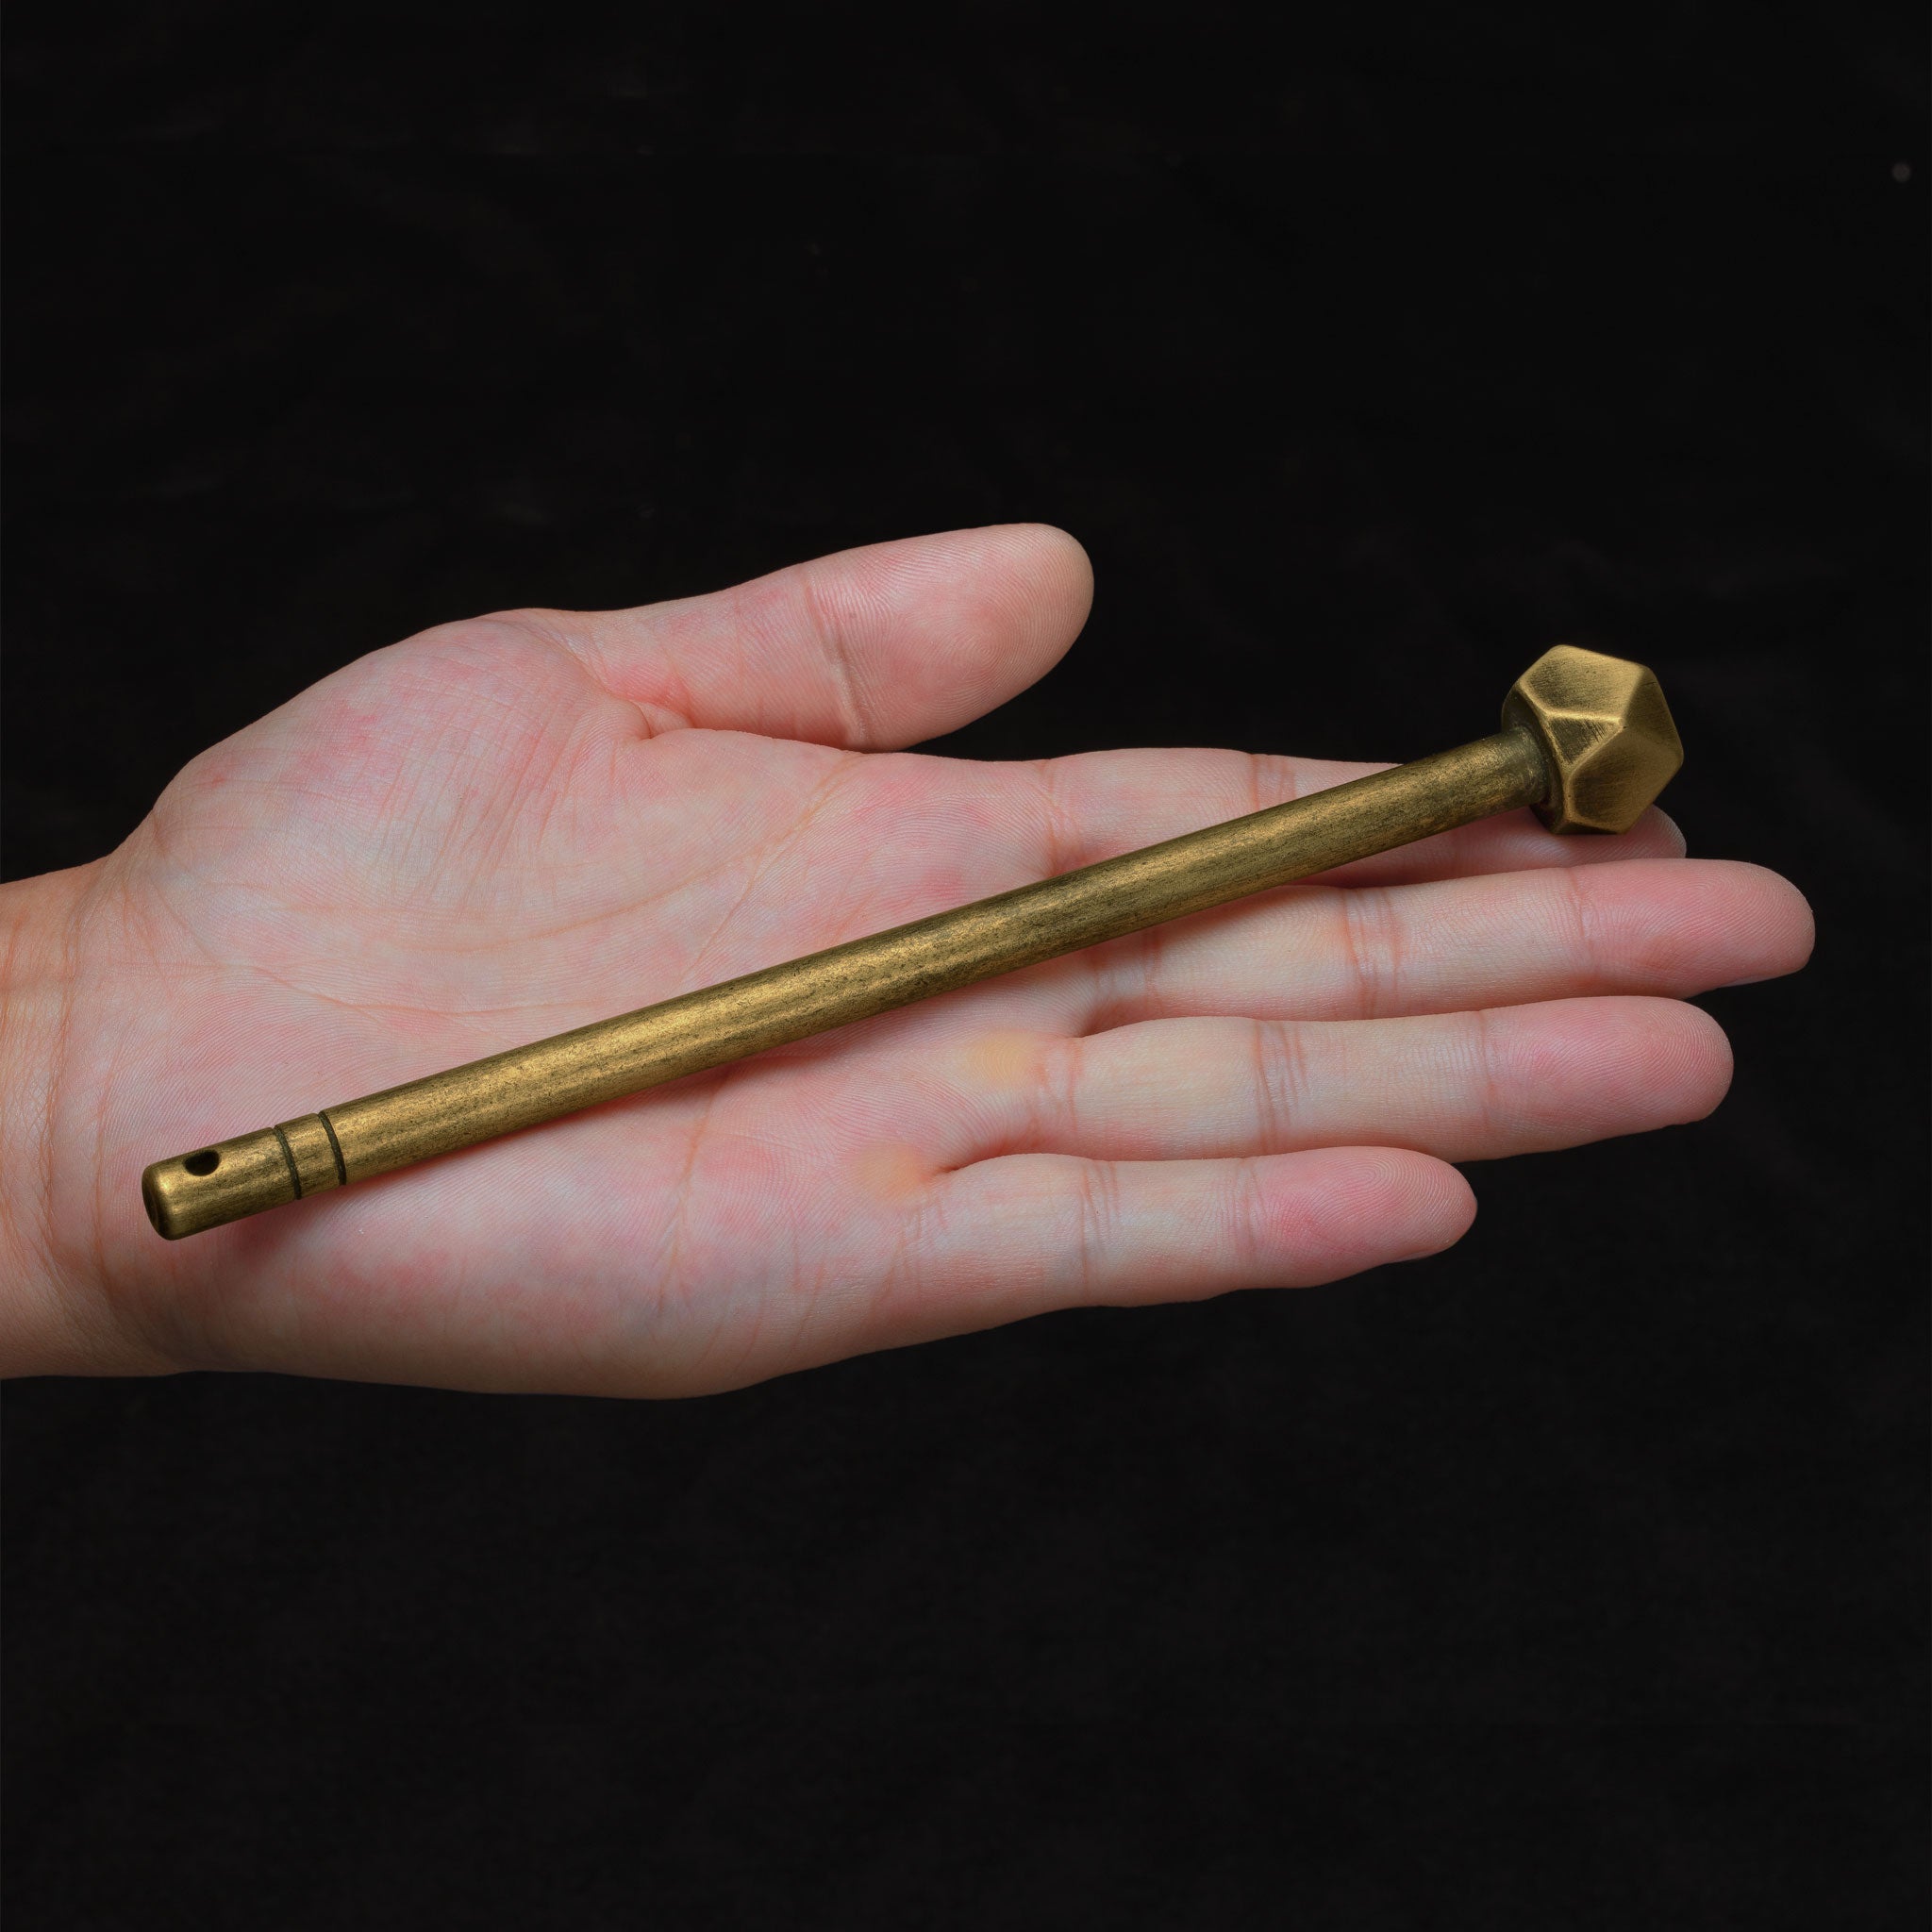 14 Sided Key Pins 6" Set of 2-Chinese Brass Hardware